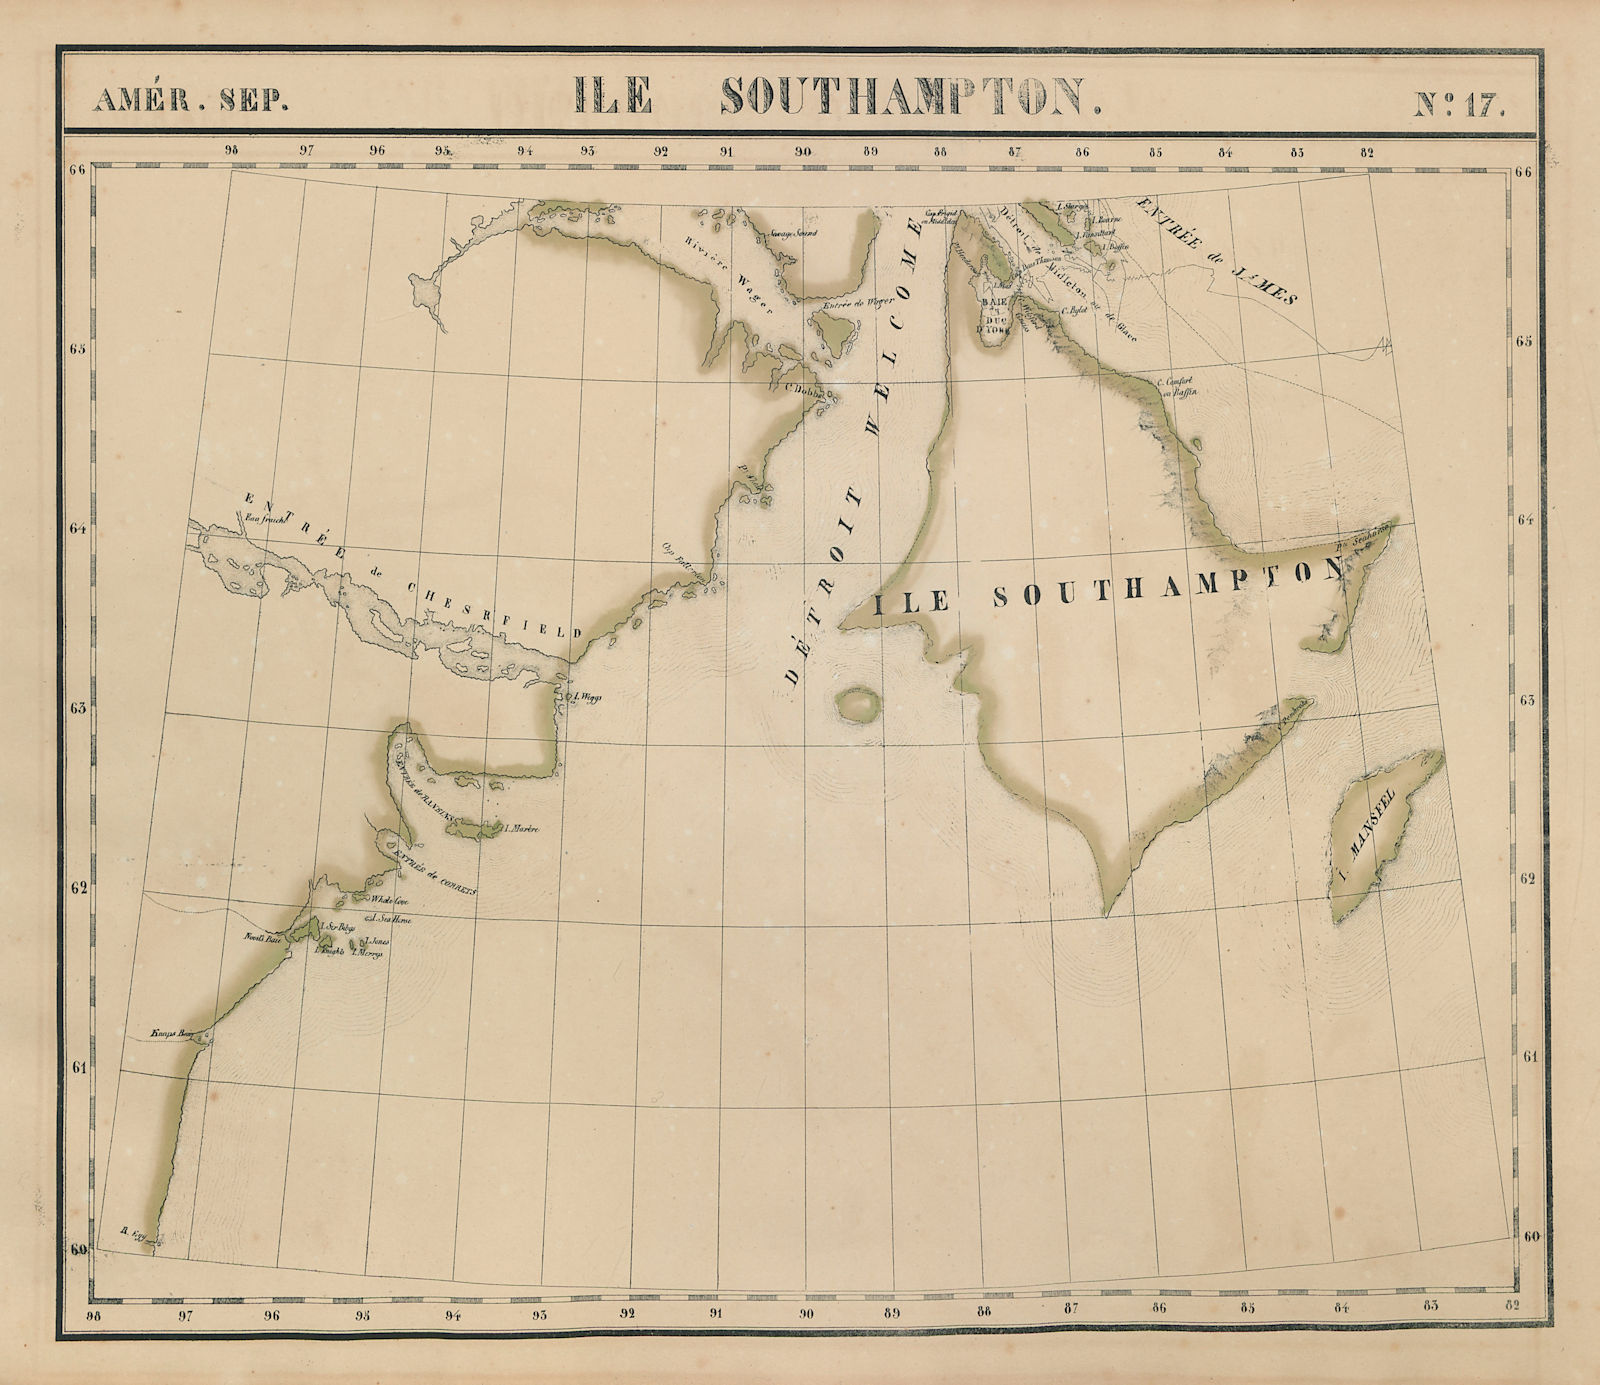 Amér. Sep. Ile Southampton Island #17. Hudson Bay Canada. VANDERMAELEN 1827 map